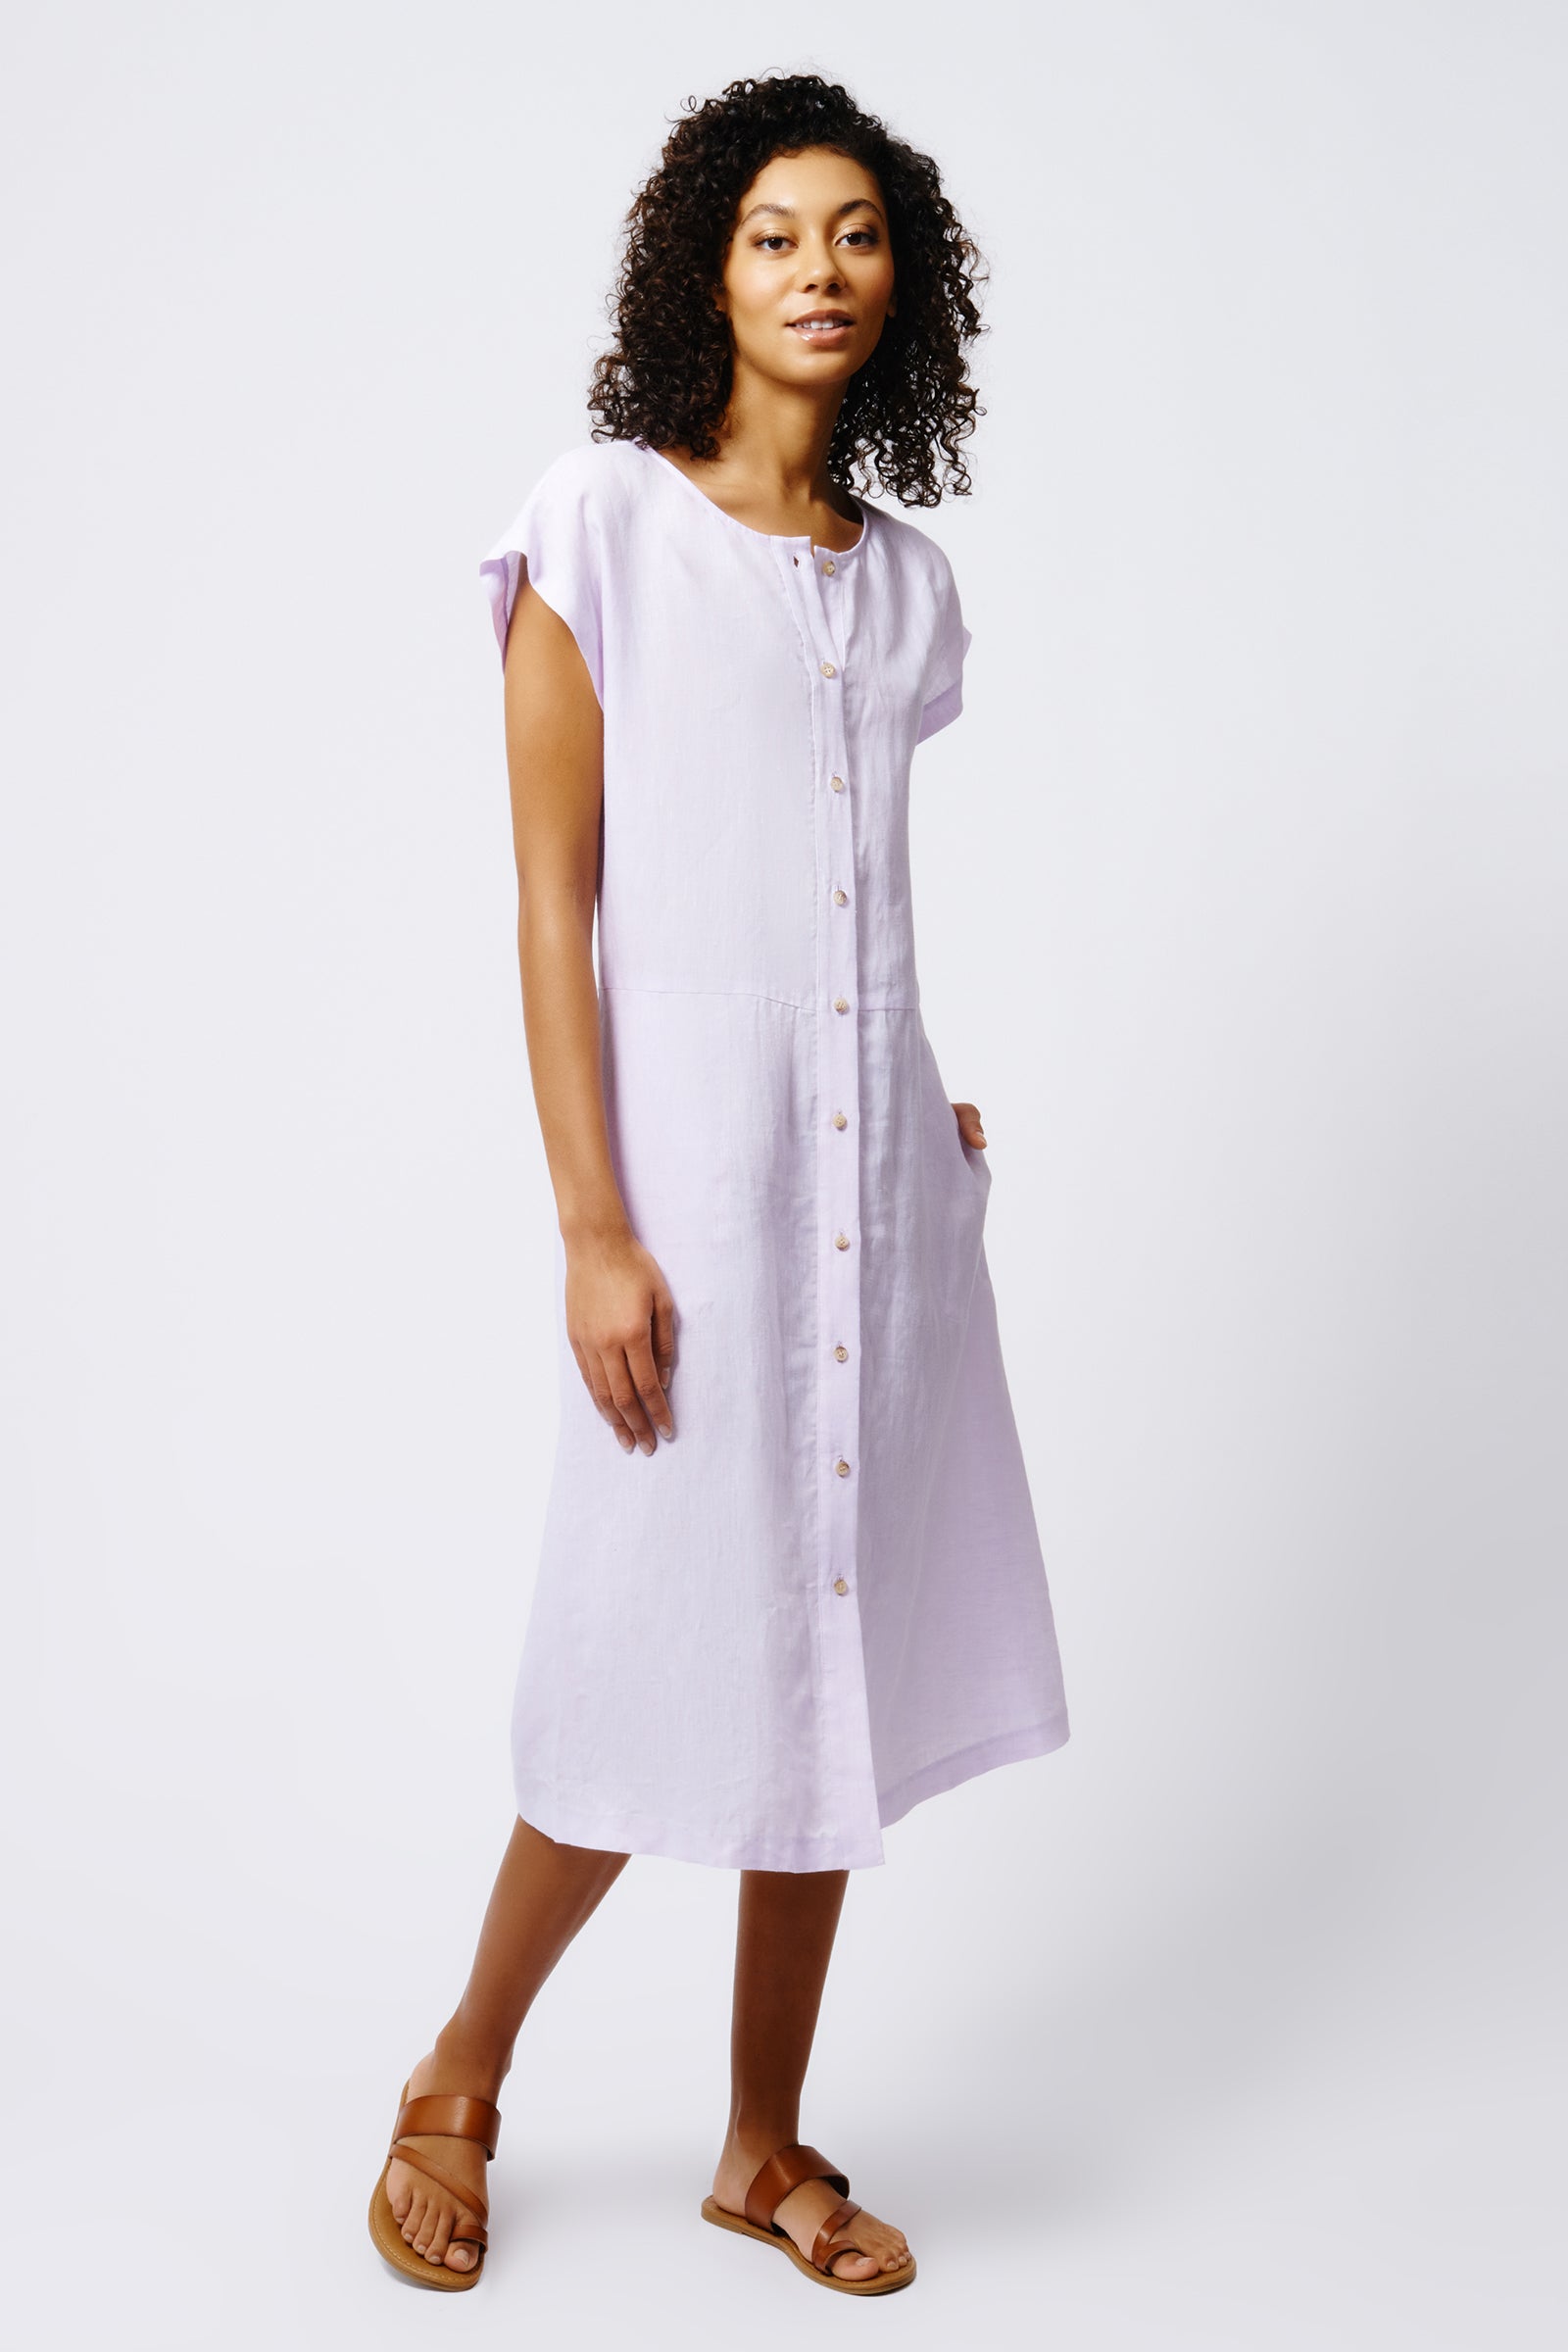 Kal Rieman Harlow Cap Sleeve Dress in Lavender Linen on Model Front View Full 3